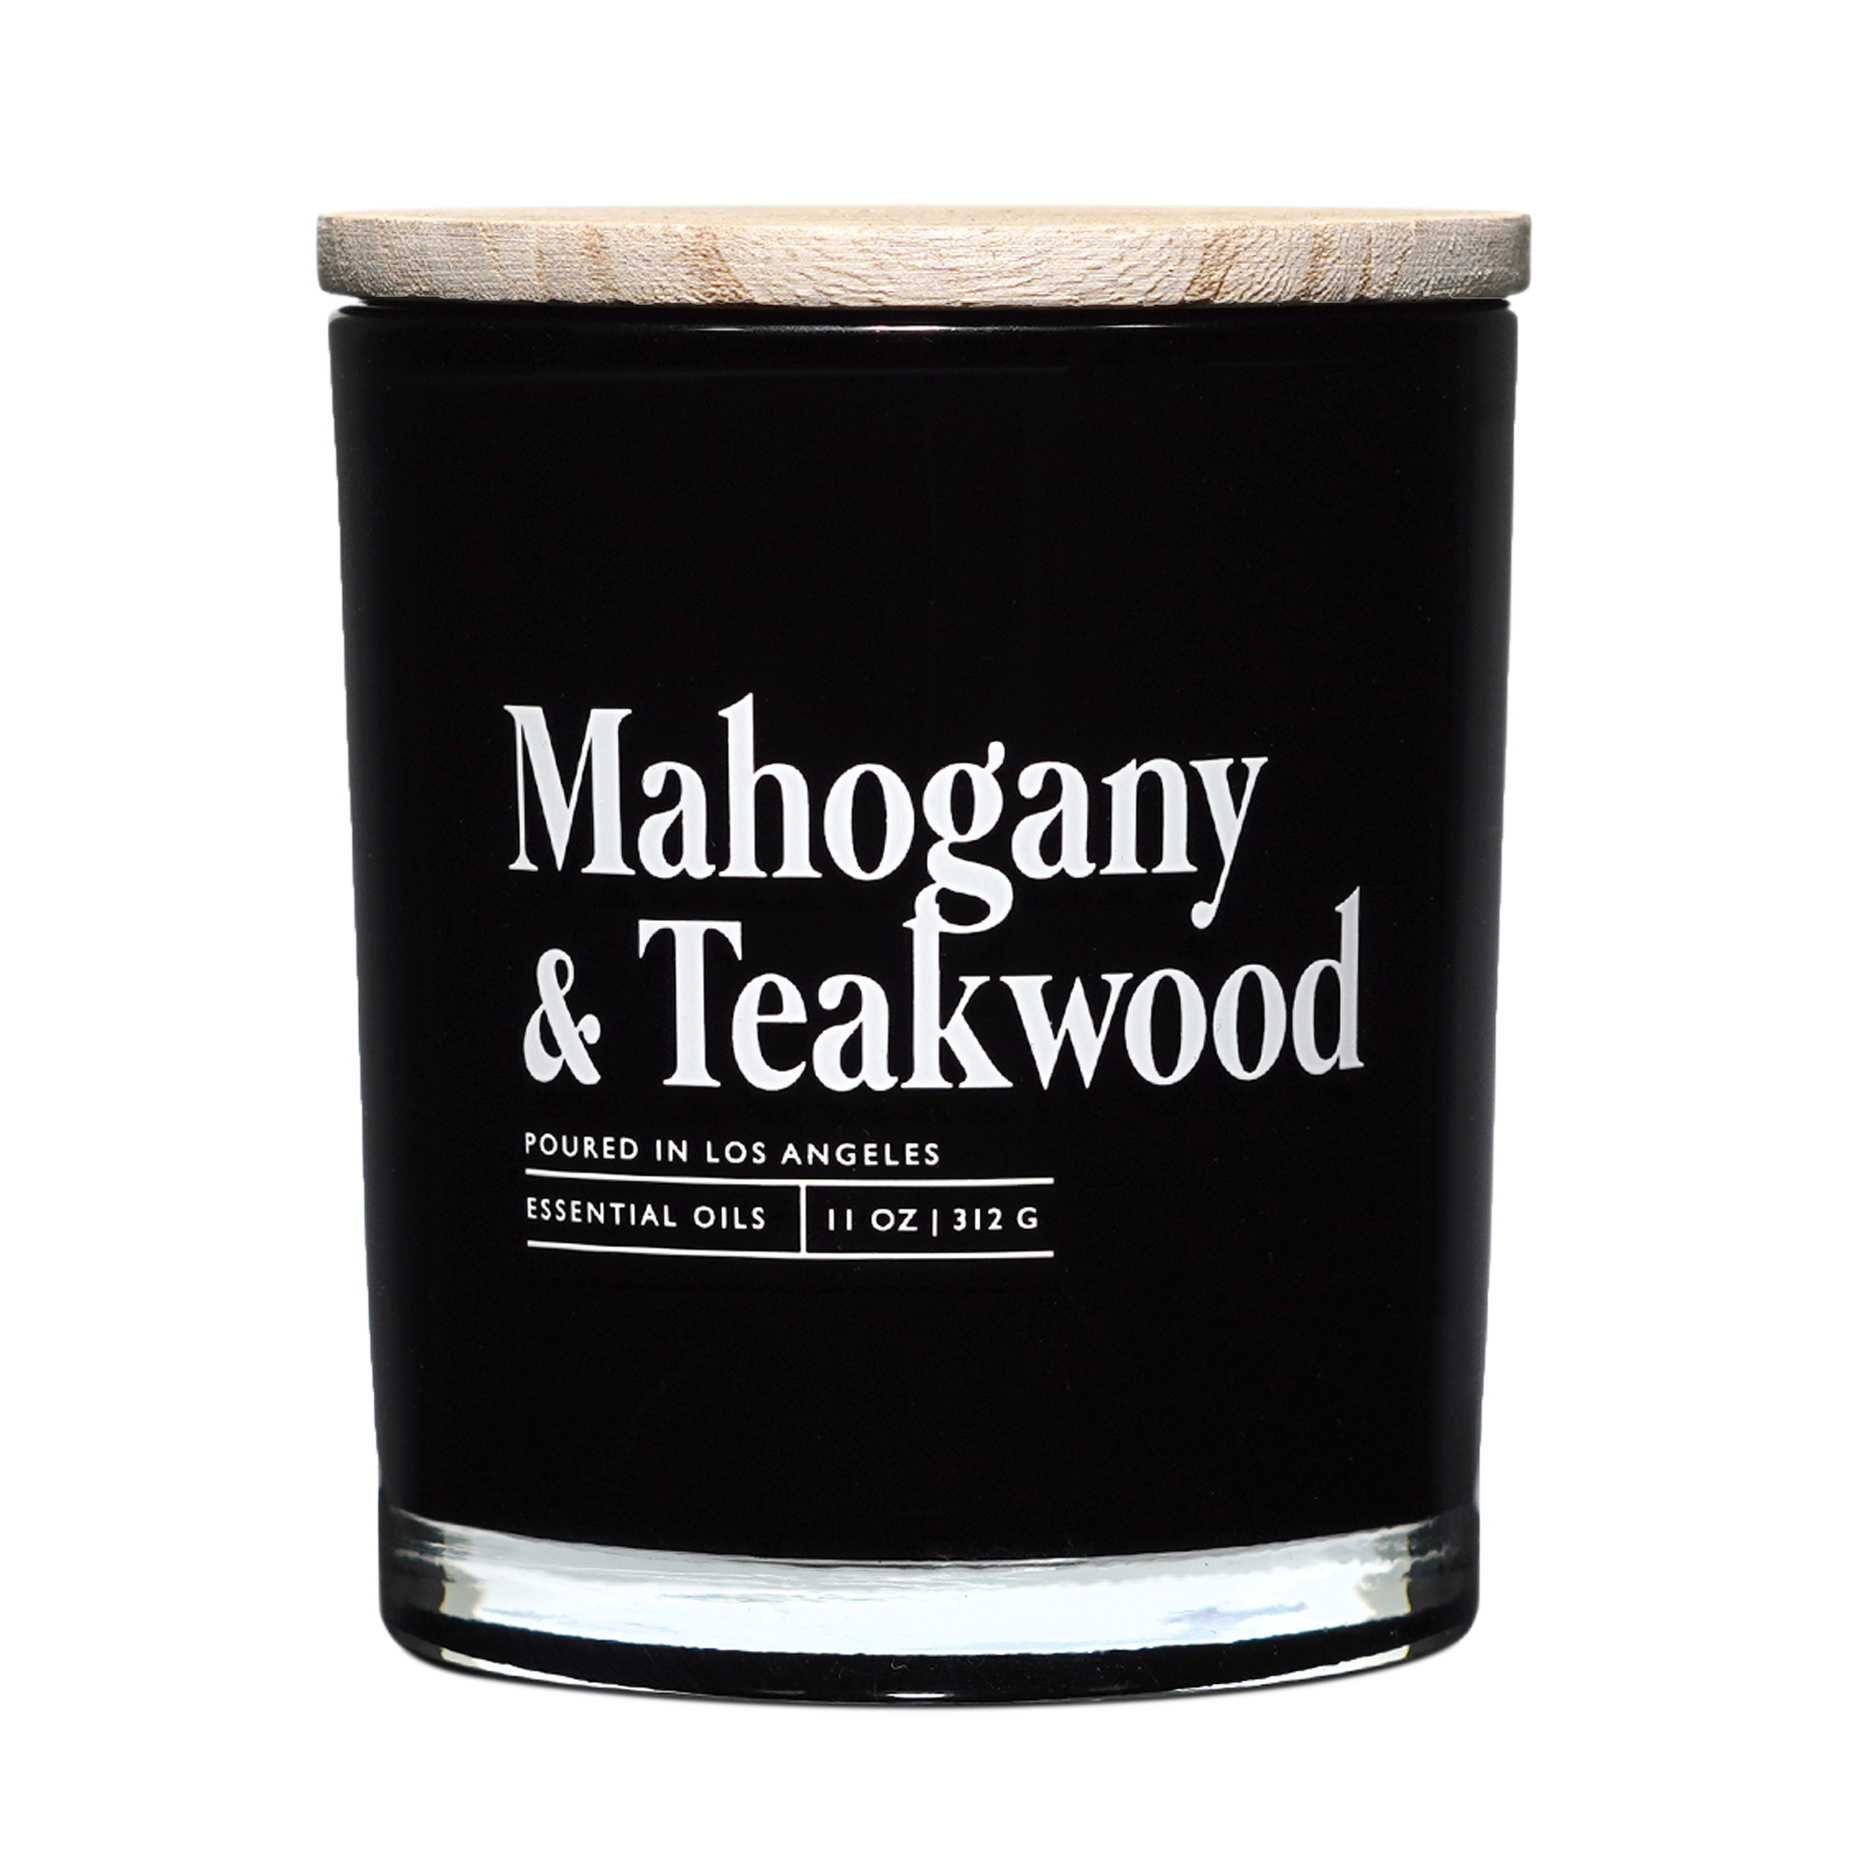 Mahogany Teakwood - Inglenook & Co., LLC